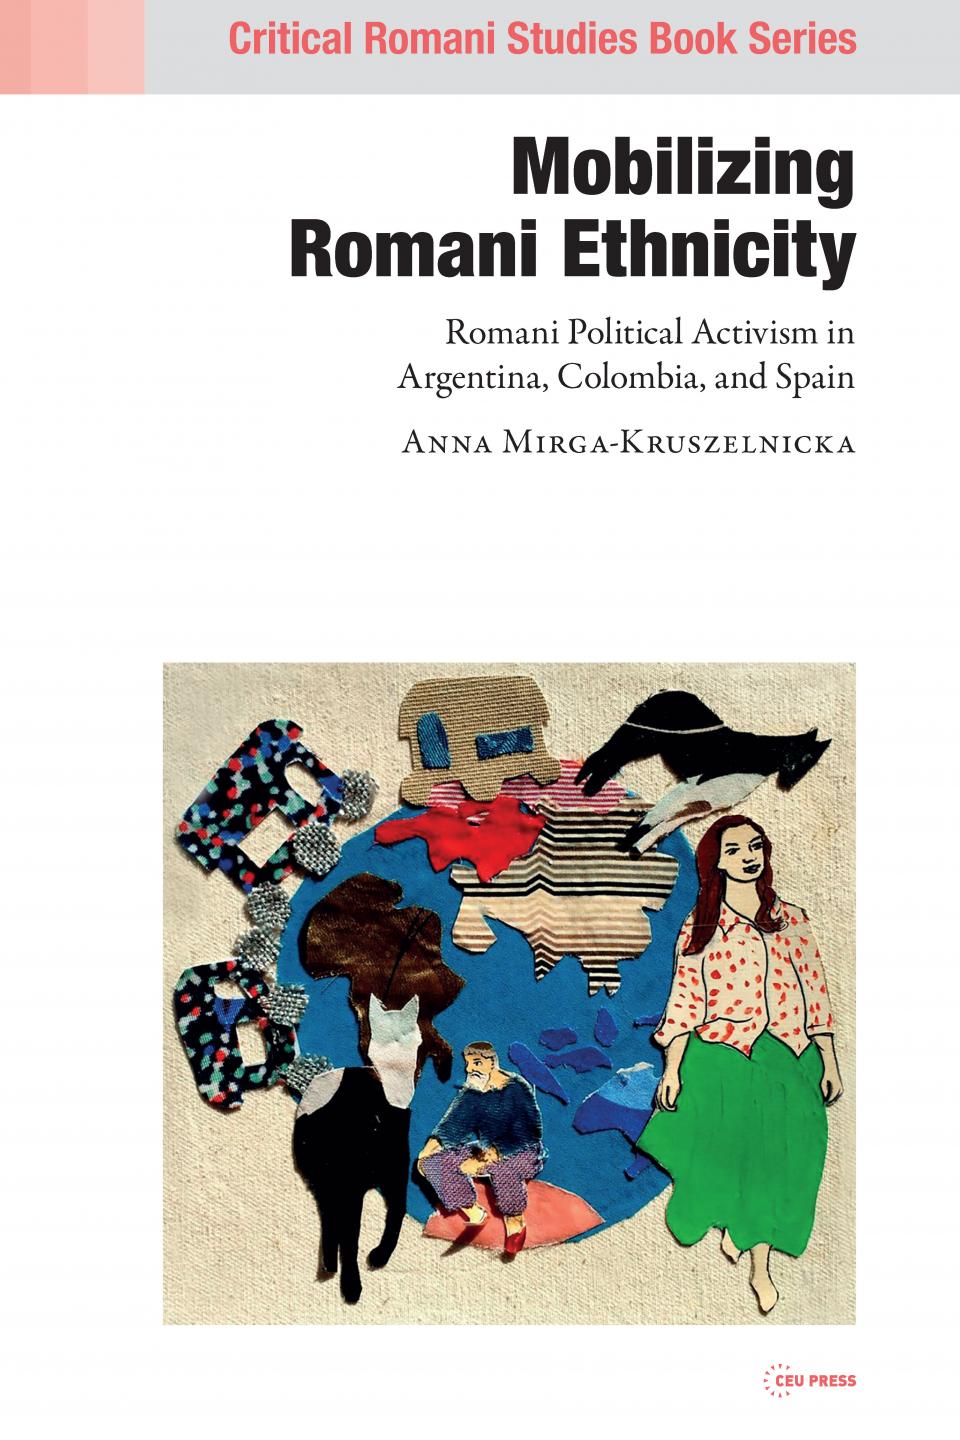 Buchcover von Anna Mirga-Kruszelnicka: Mobilizing Romani Ethnicity. Romani Political Activism in Argentinia, Colombia, and Spain.